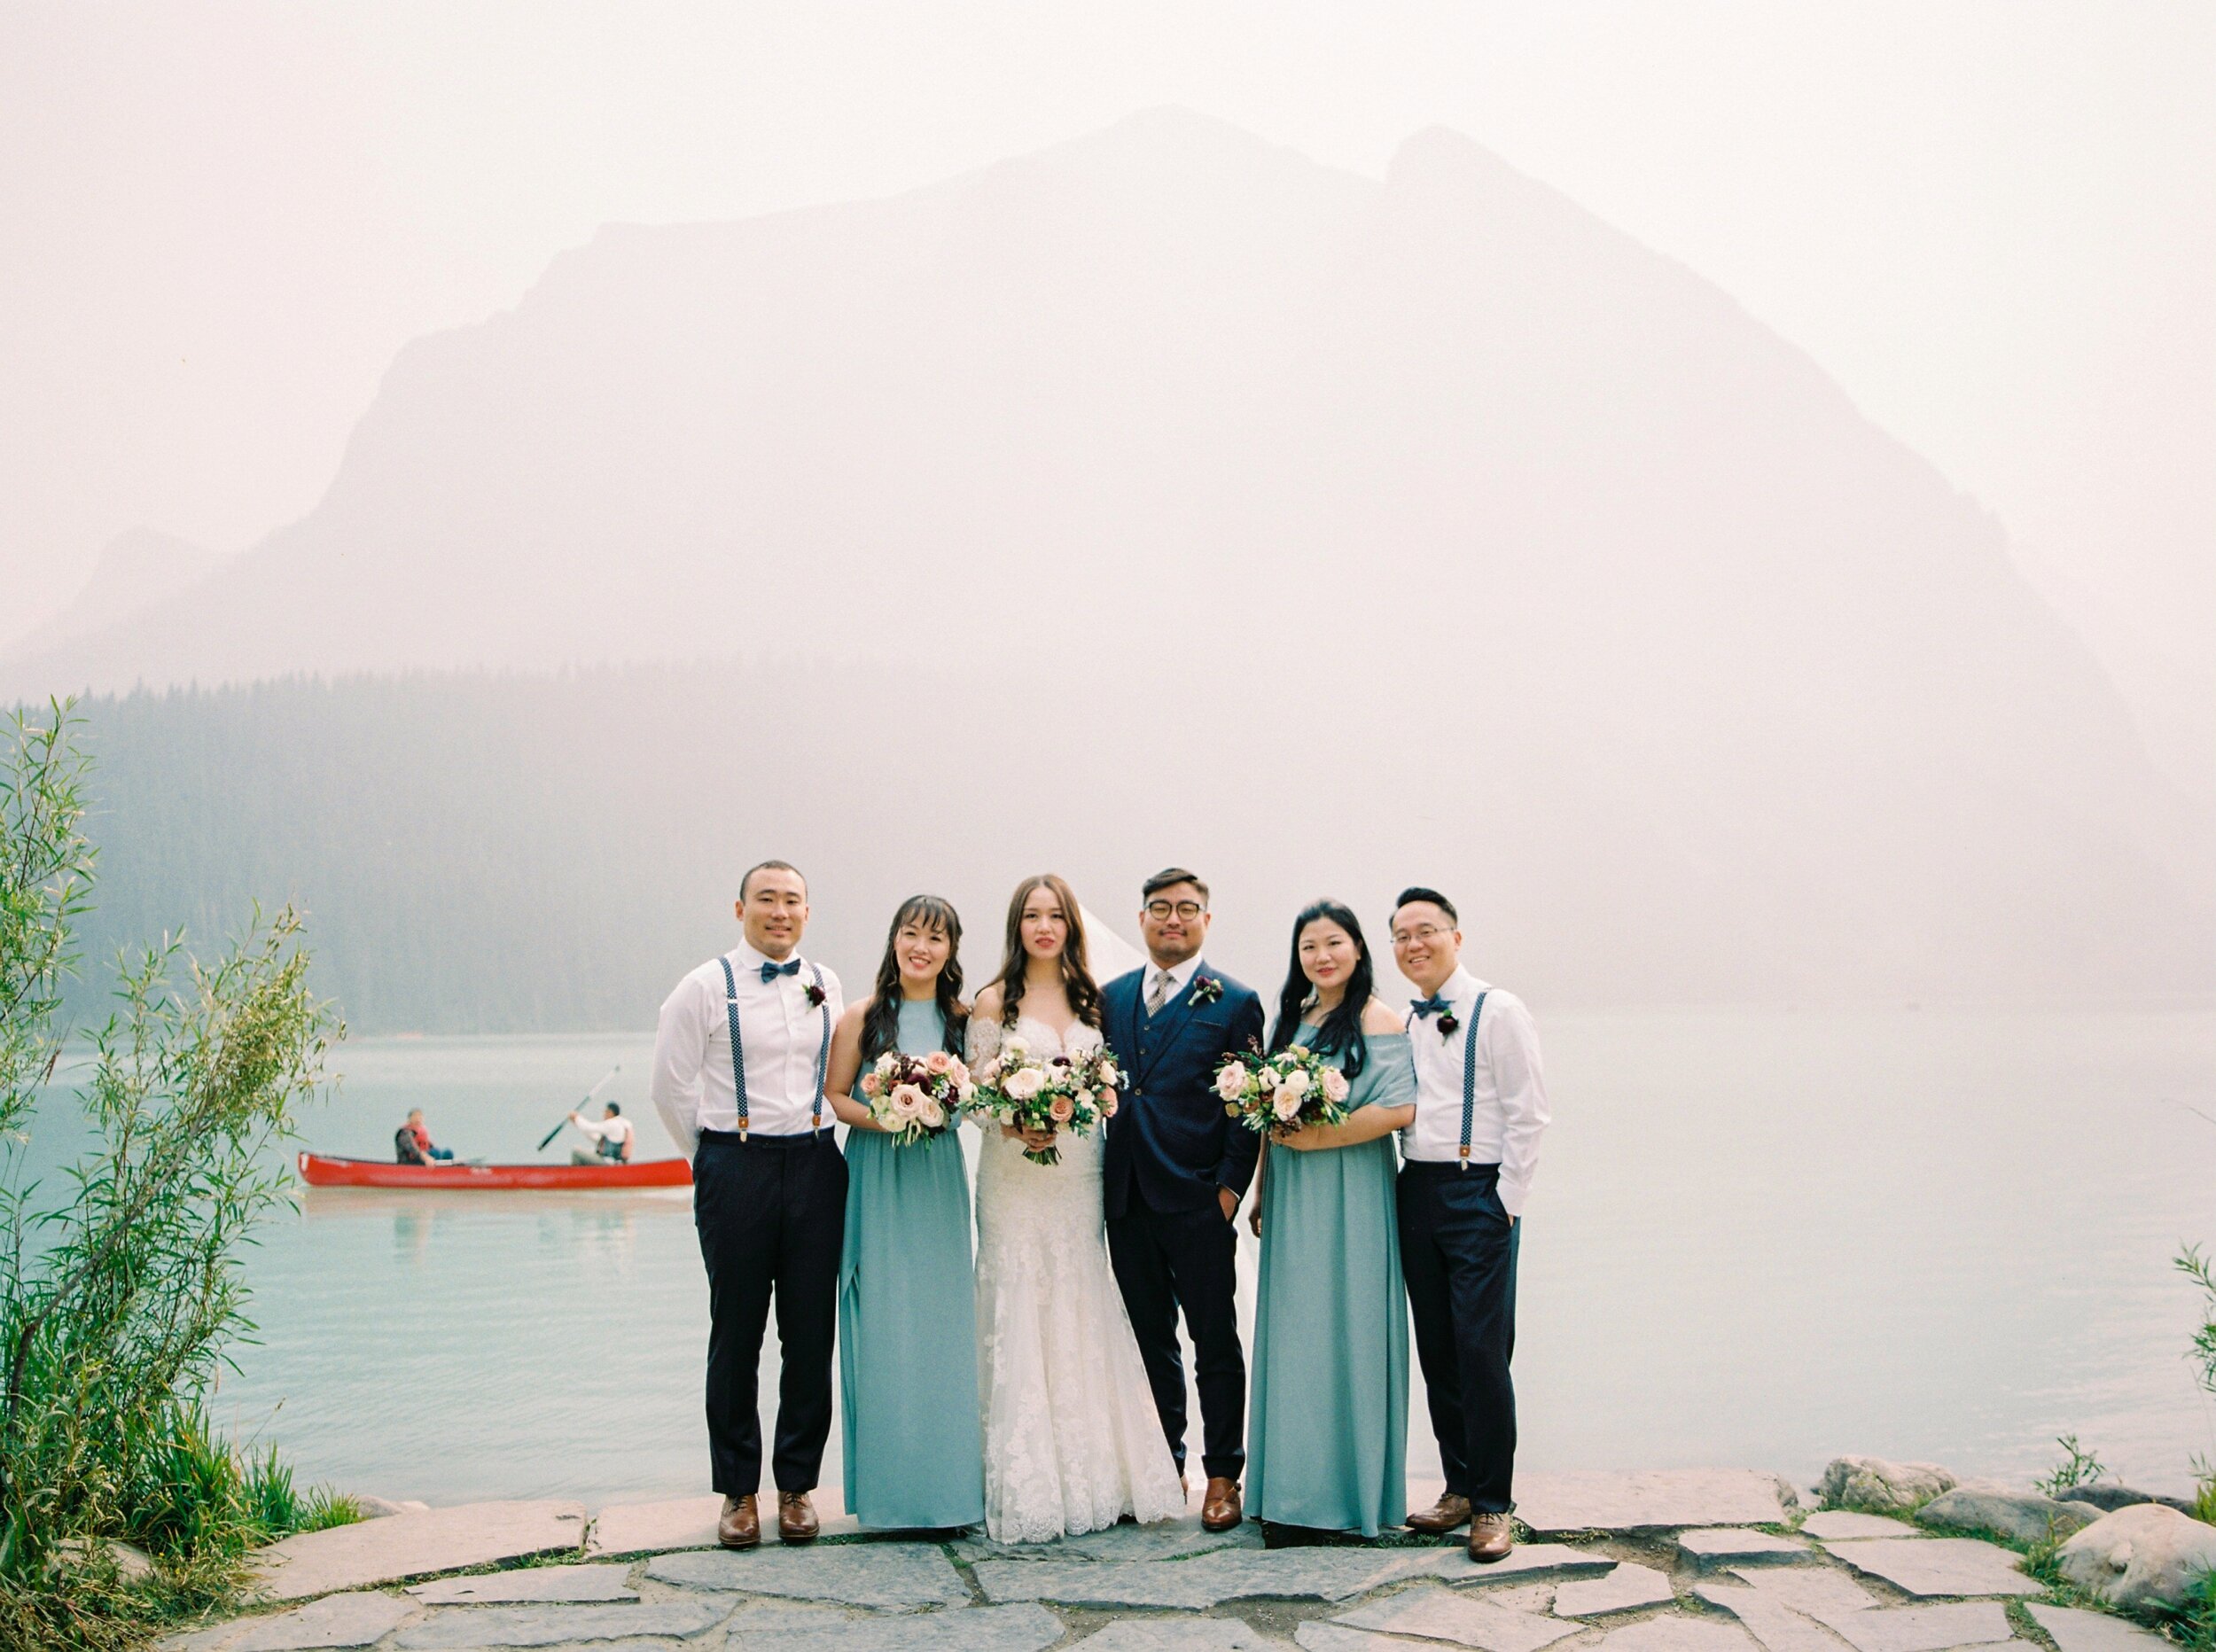  Lake Louise wedding photographers | Justine milton photography | fine art film destination wedding photographer | fairmont chateau lake louise wedding party portrait 